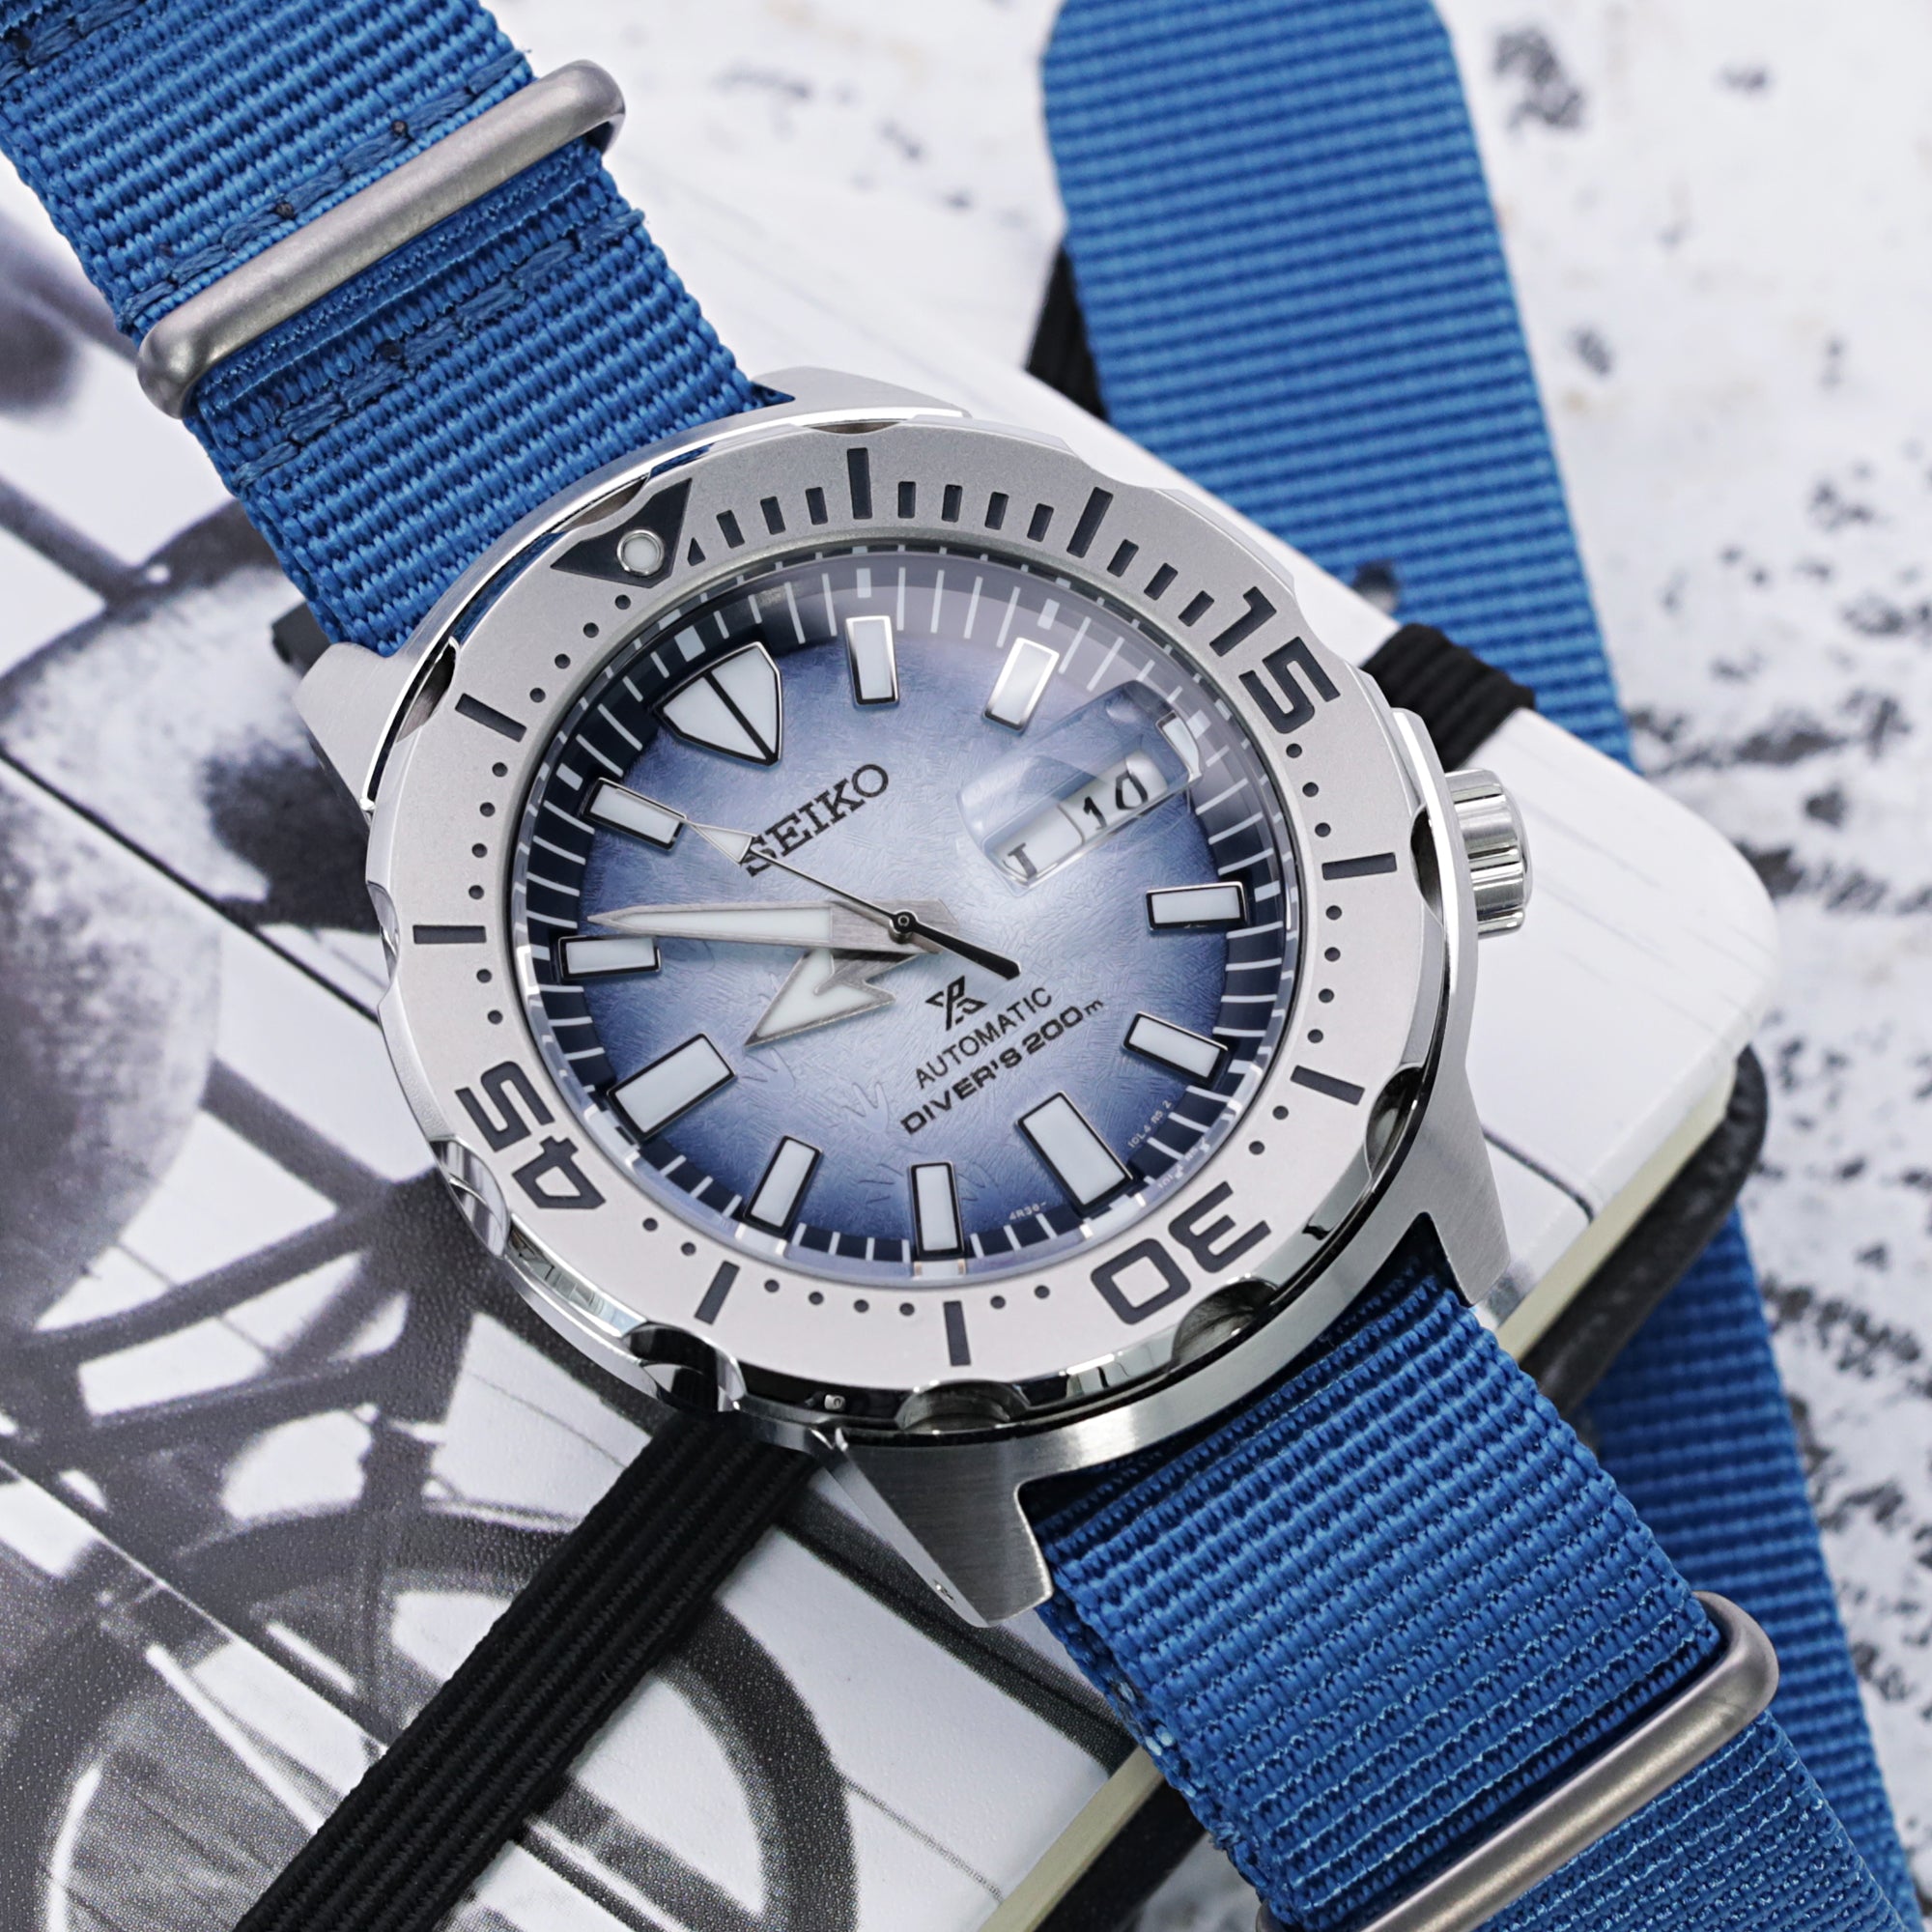 One-piece 20mm Military Watch Band Nylon Strap, Blue, Sandblasted, 260mm